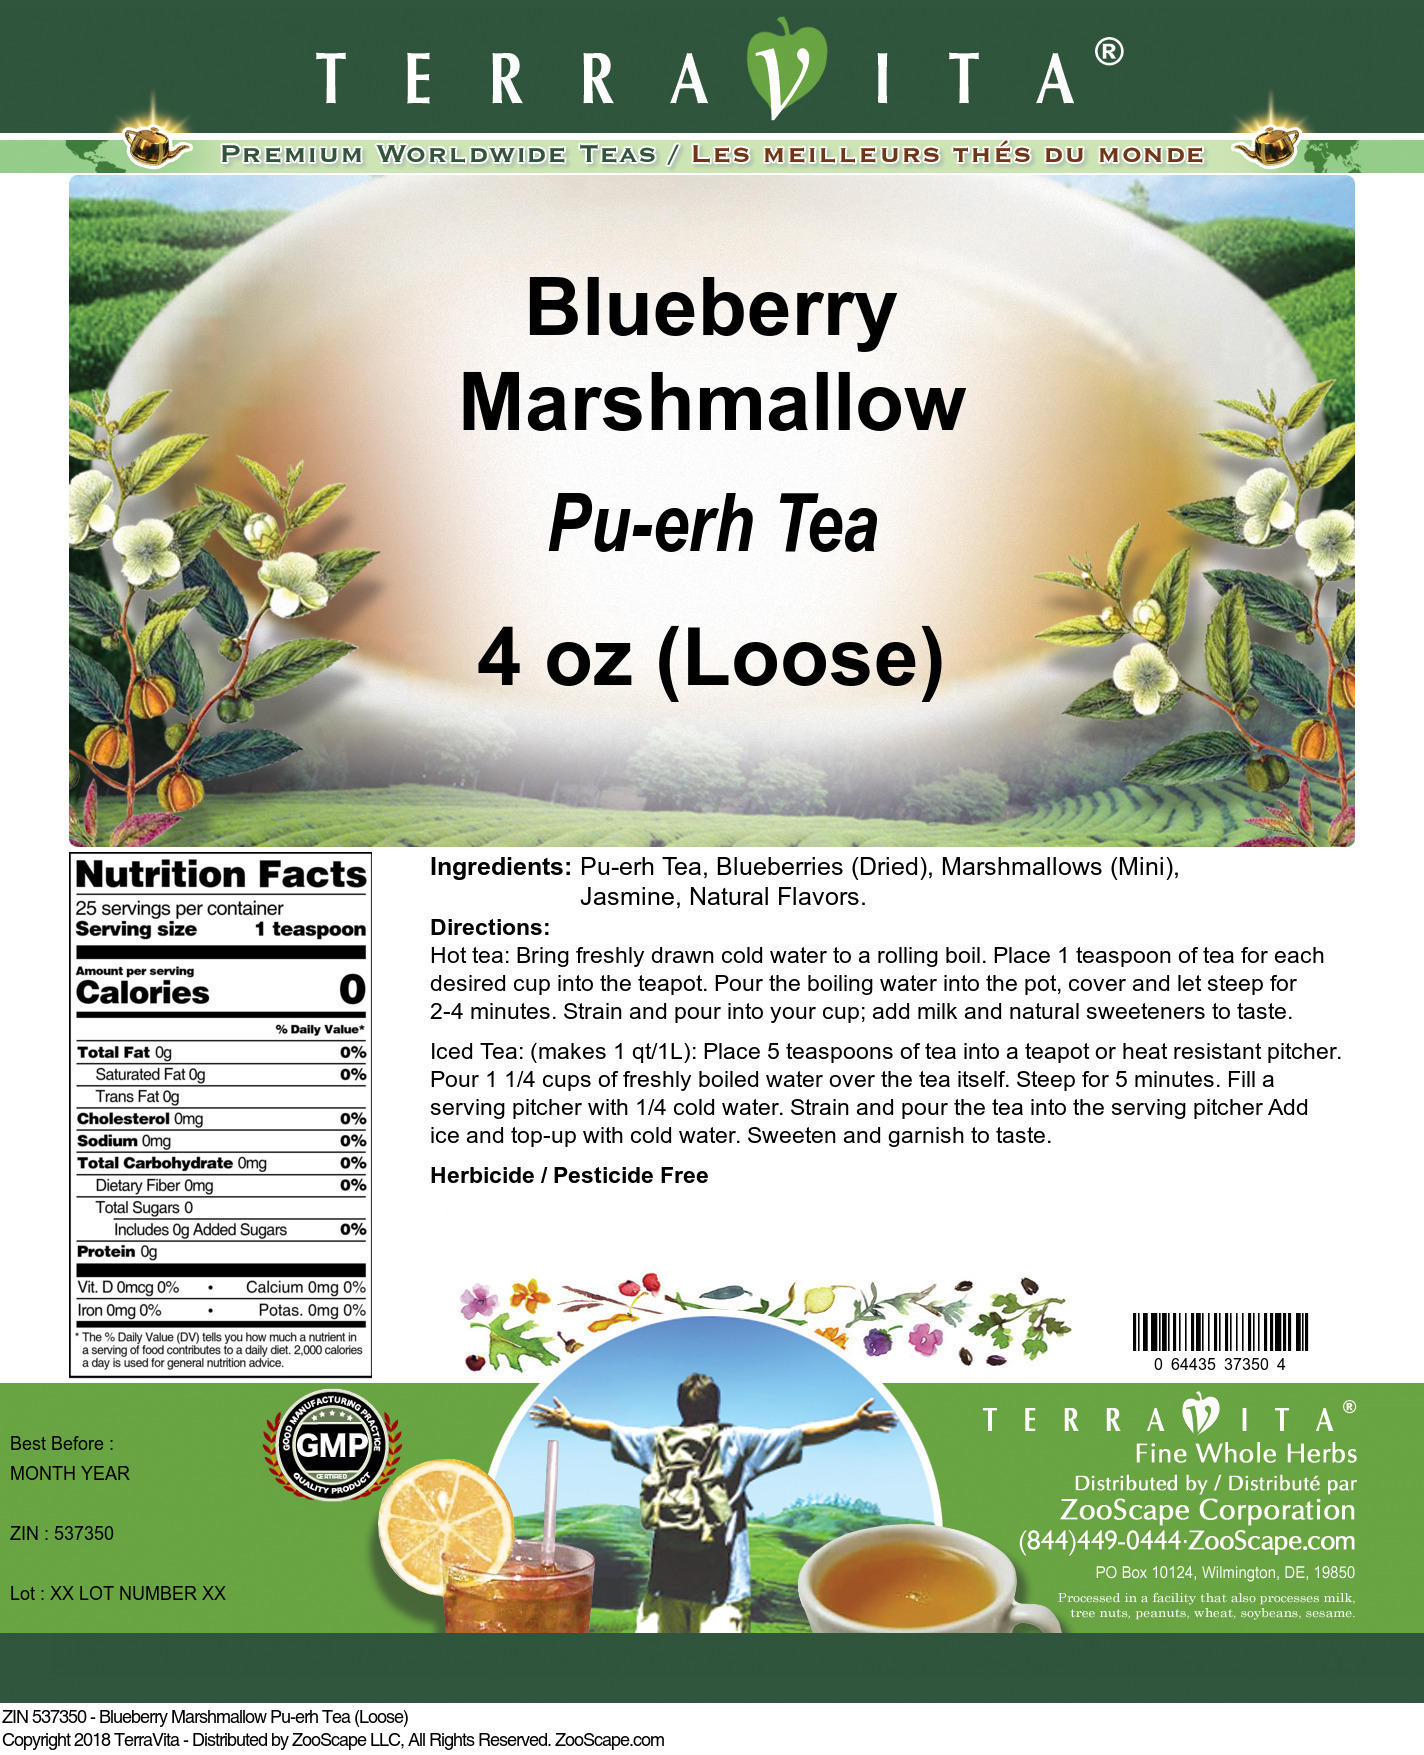 Blueberry Marshmallow Pu-erh Tea (Loose) - Label